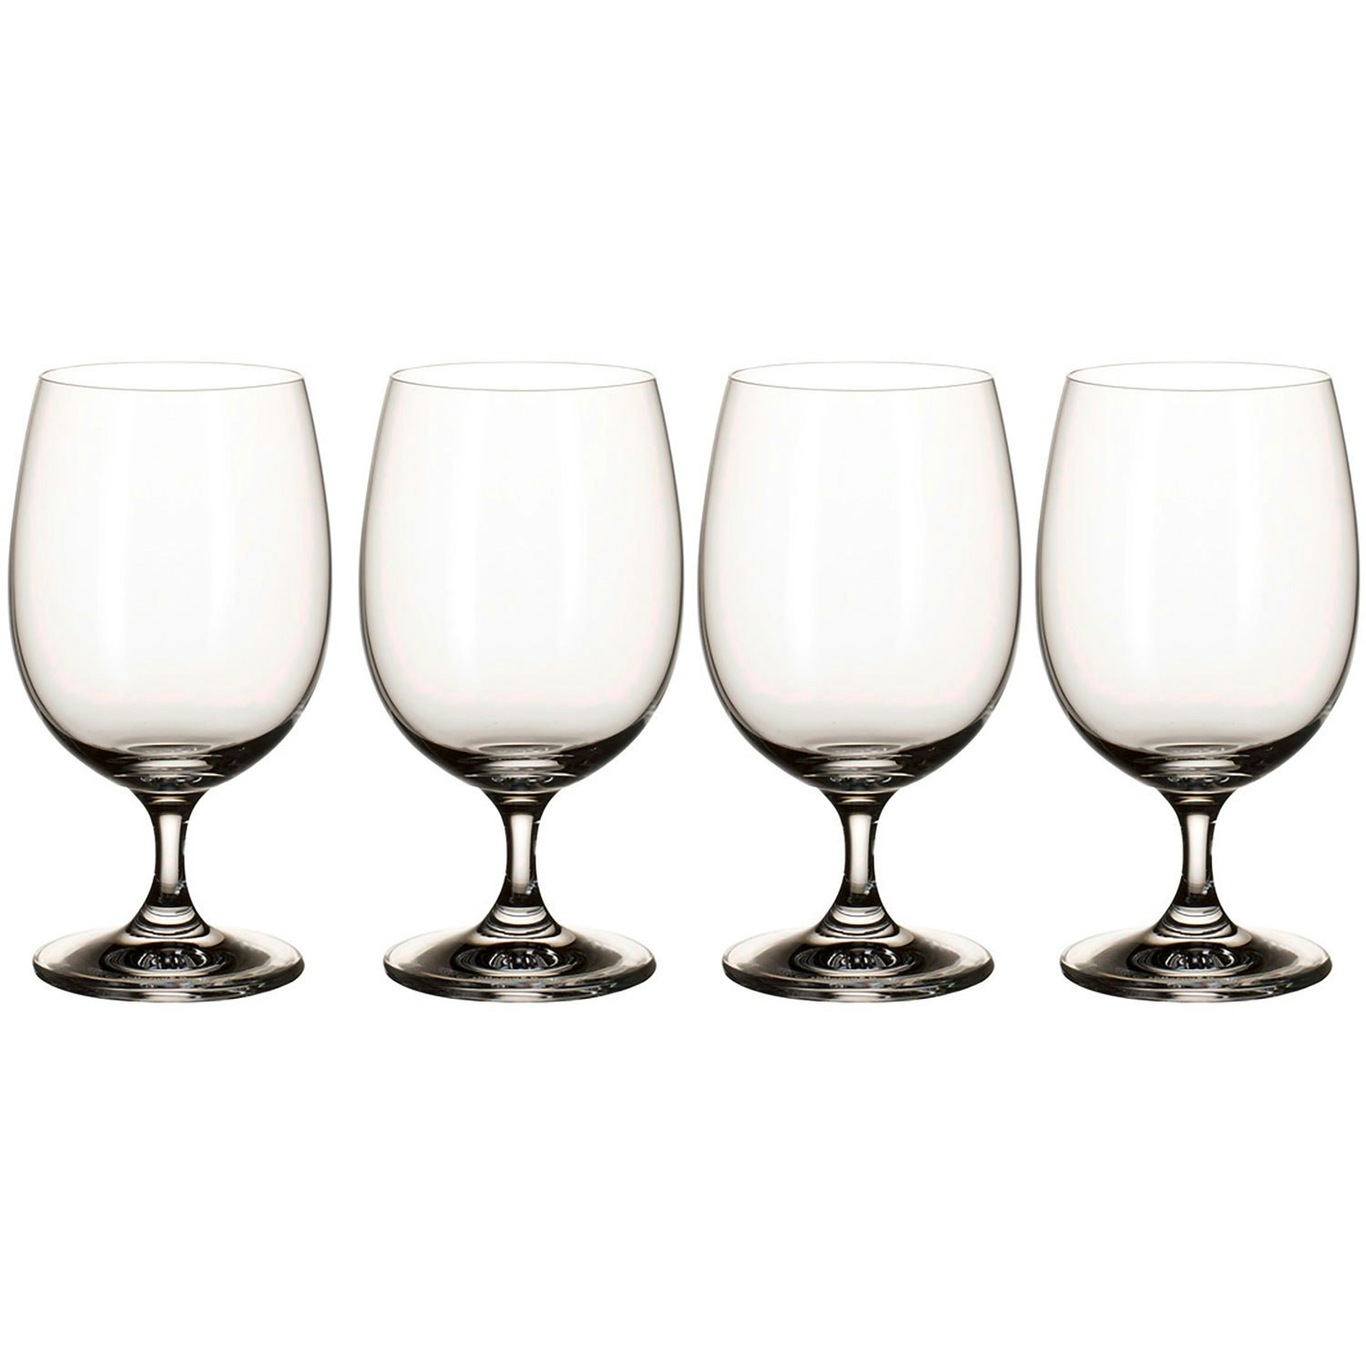 https://royaldesign.com/image/2/villeroy-boch-la-divina-water-goblet-set-4-pcs-0?w=800&quality=80